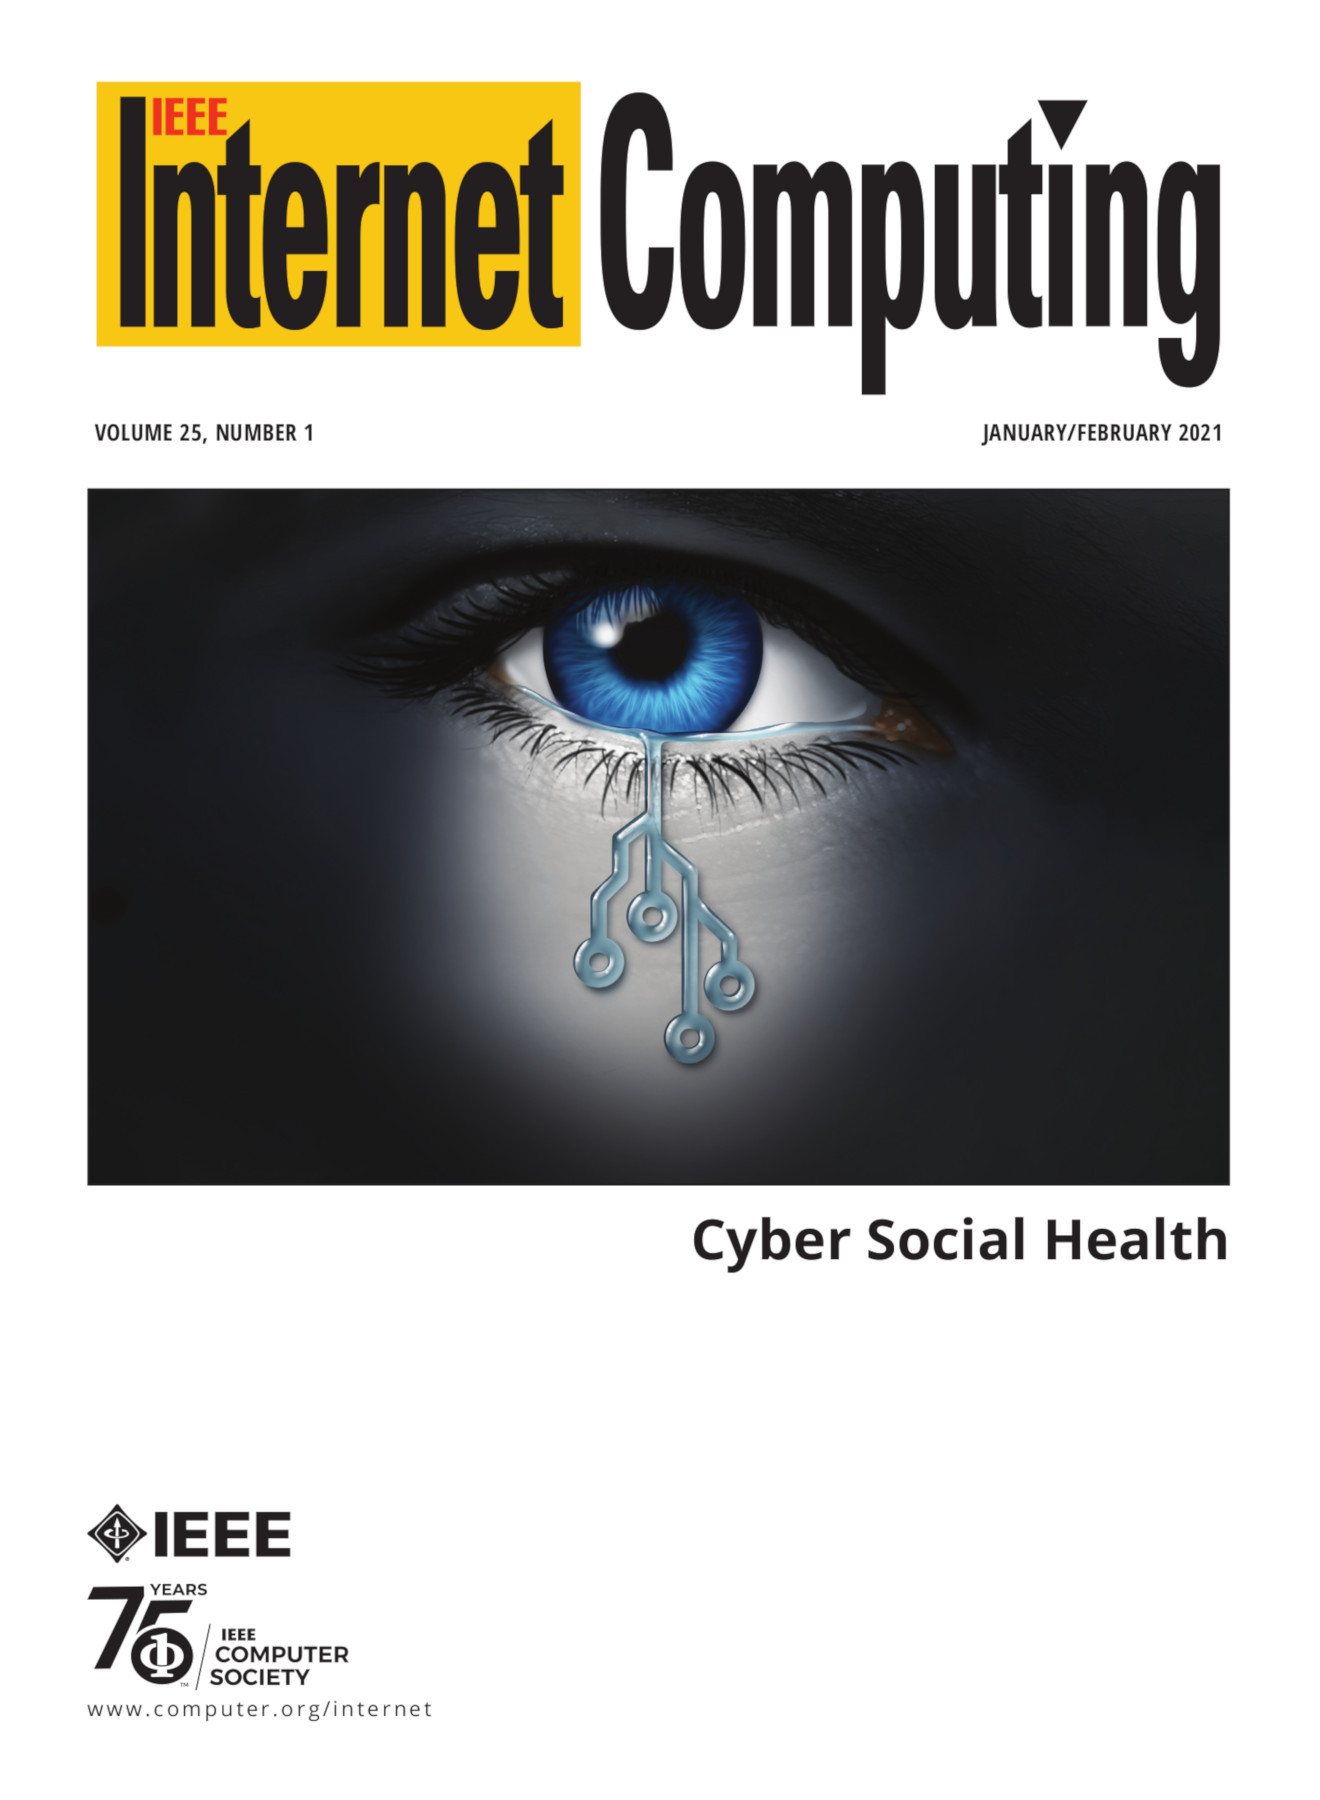 IEEE Internet Computing January/February 2021 Vol. 25 No. 1